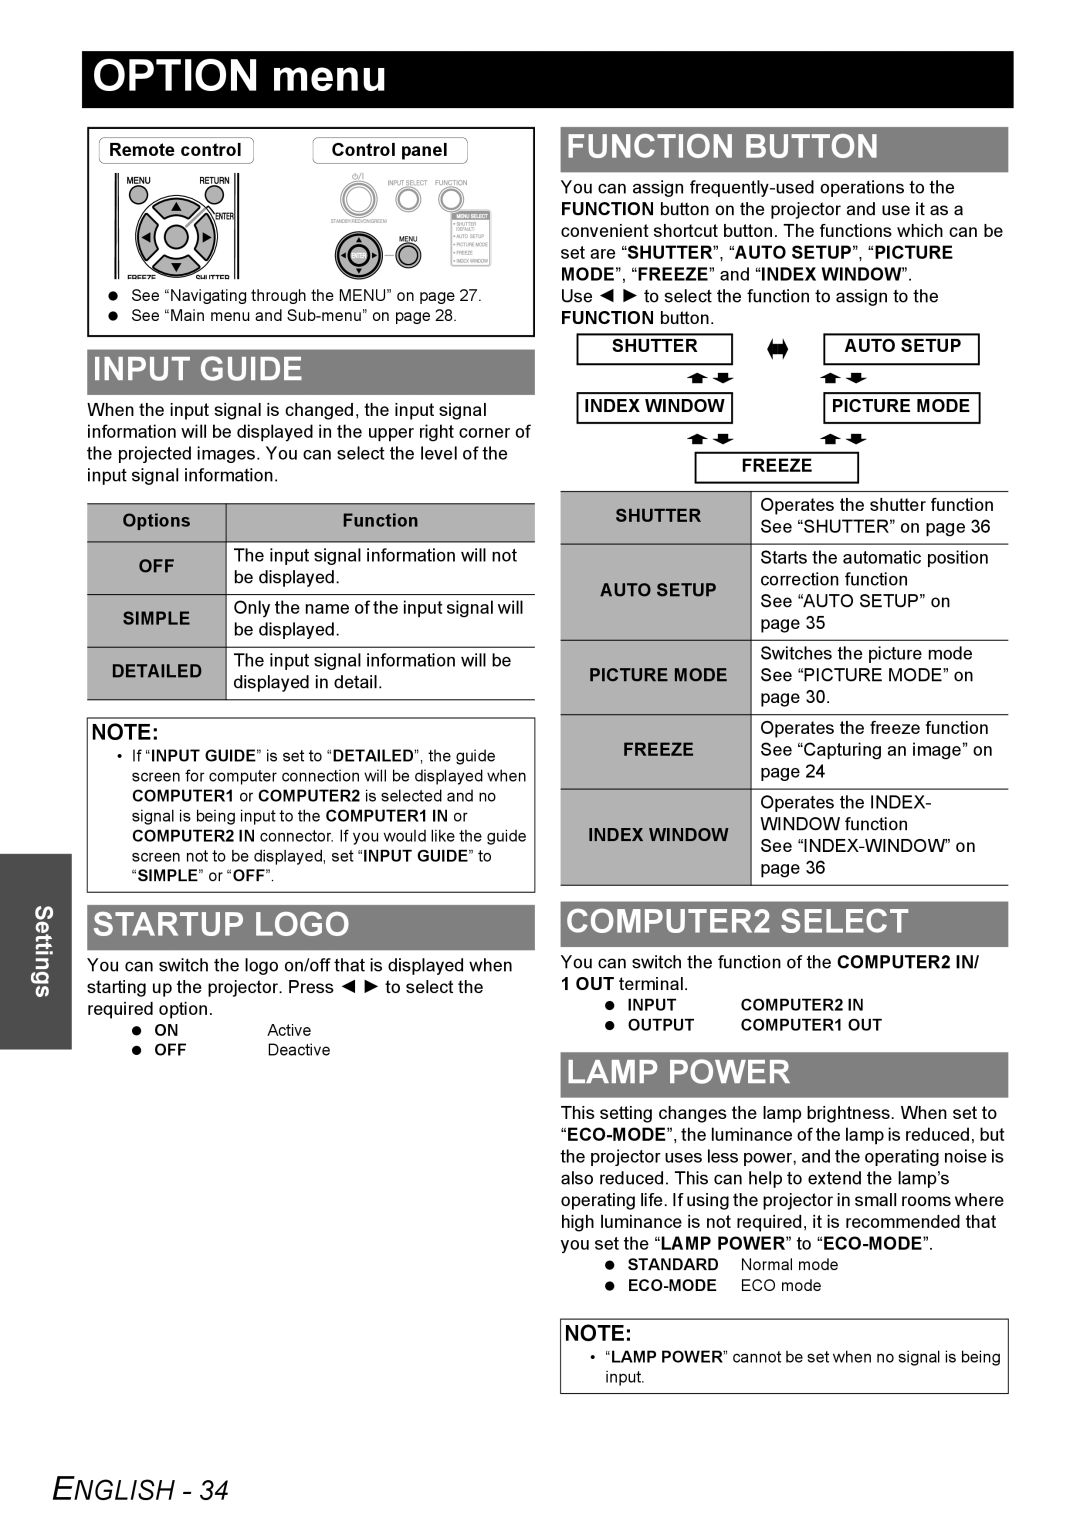 Panasonic PT-LB51NTU OPTION menu, Input Guide, Function Button, Startup Logo, COMPUTER2 SELECT, Lamp Power, English 